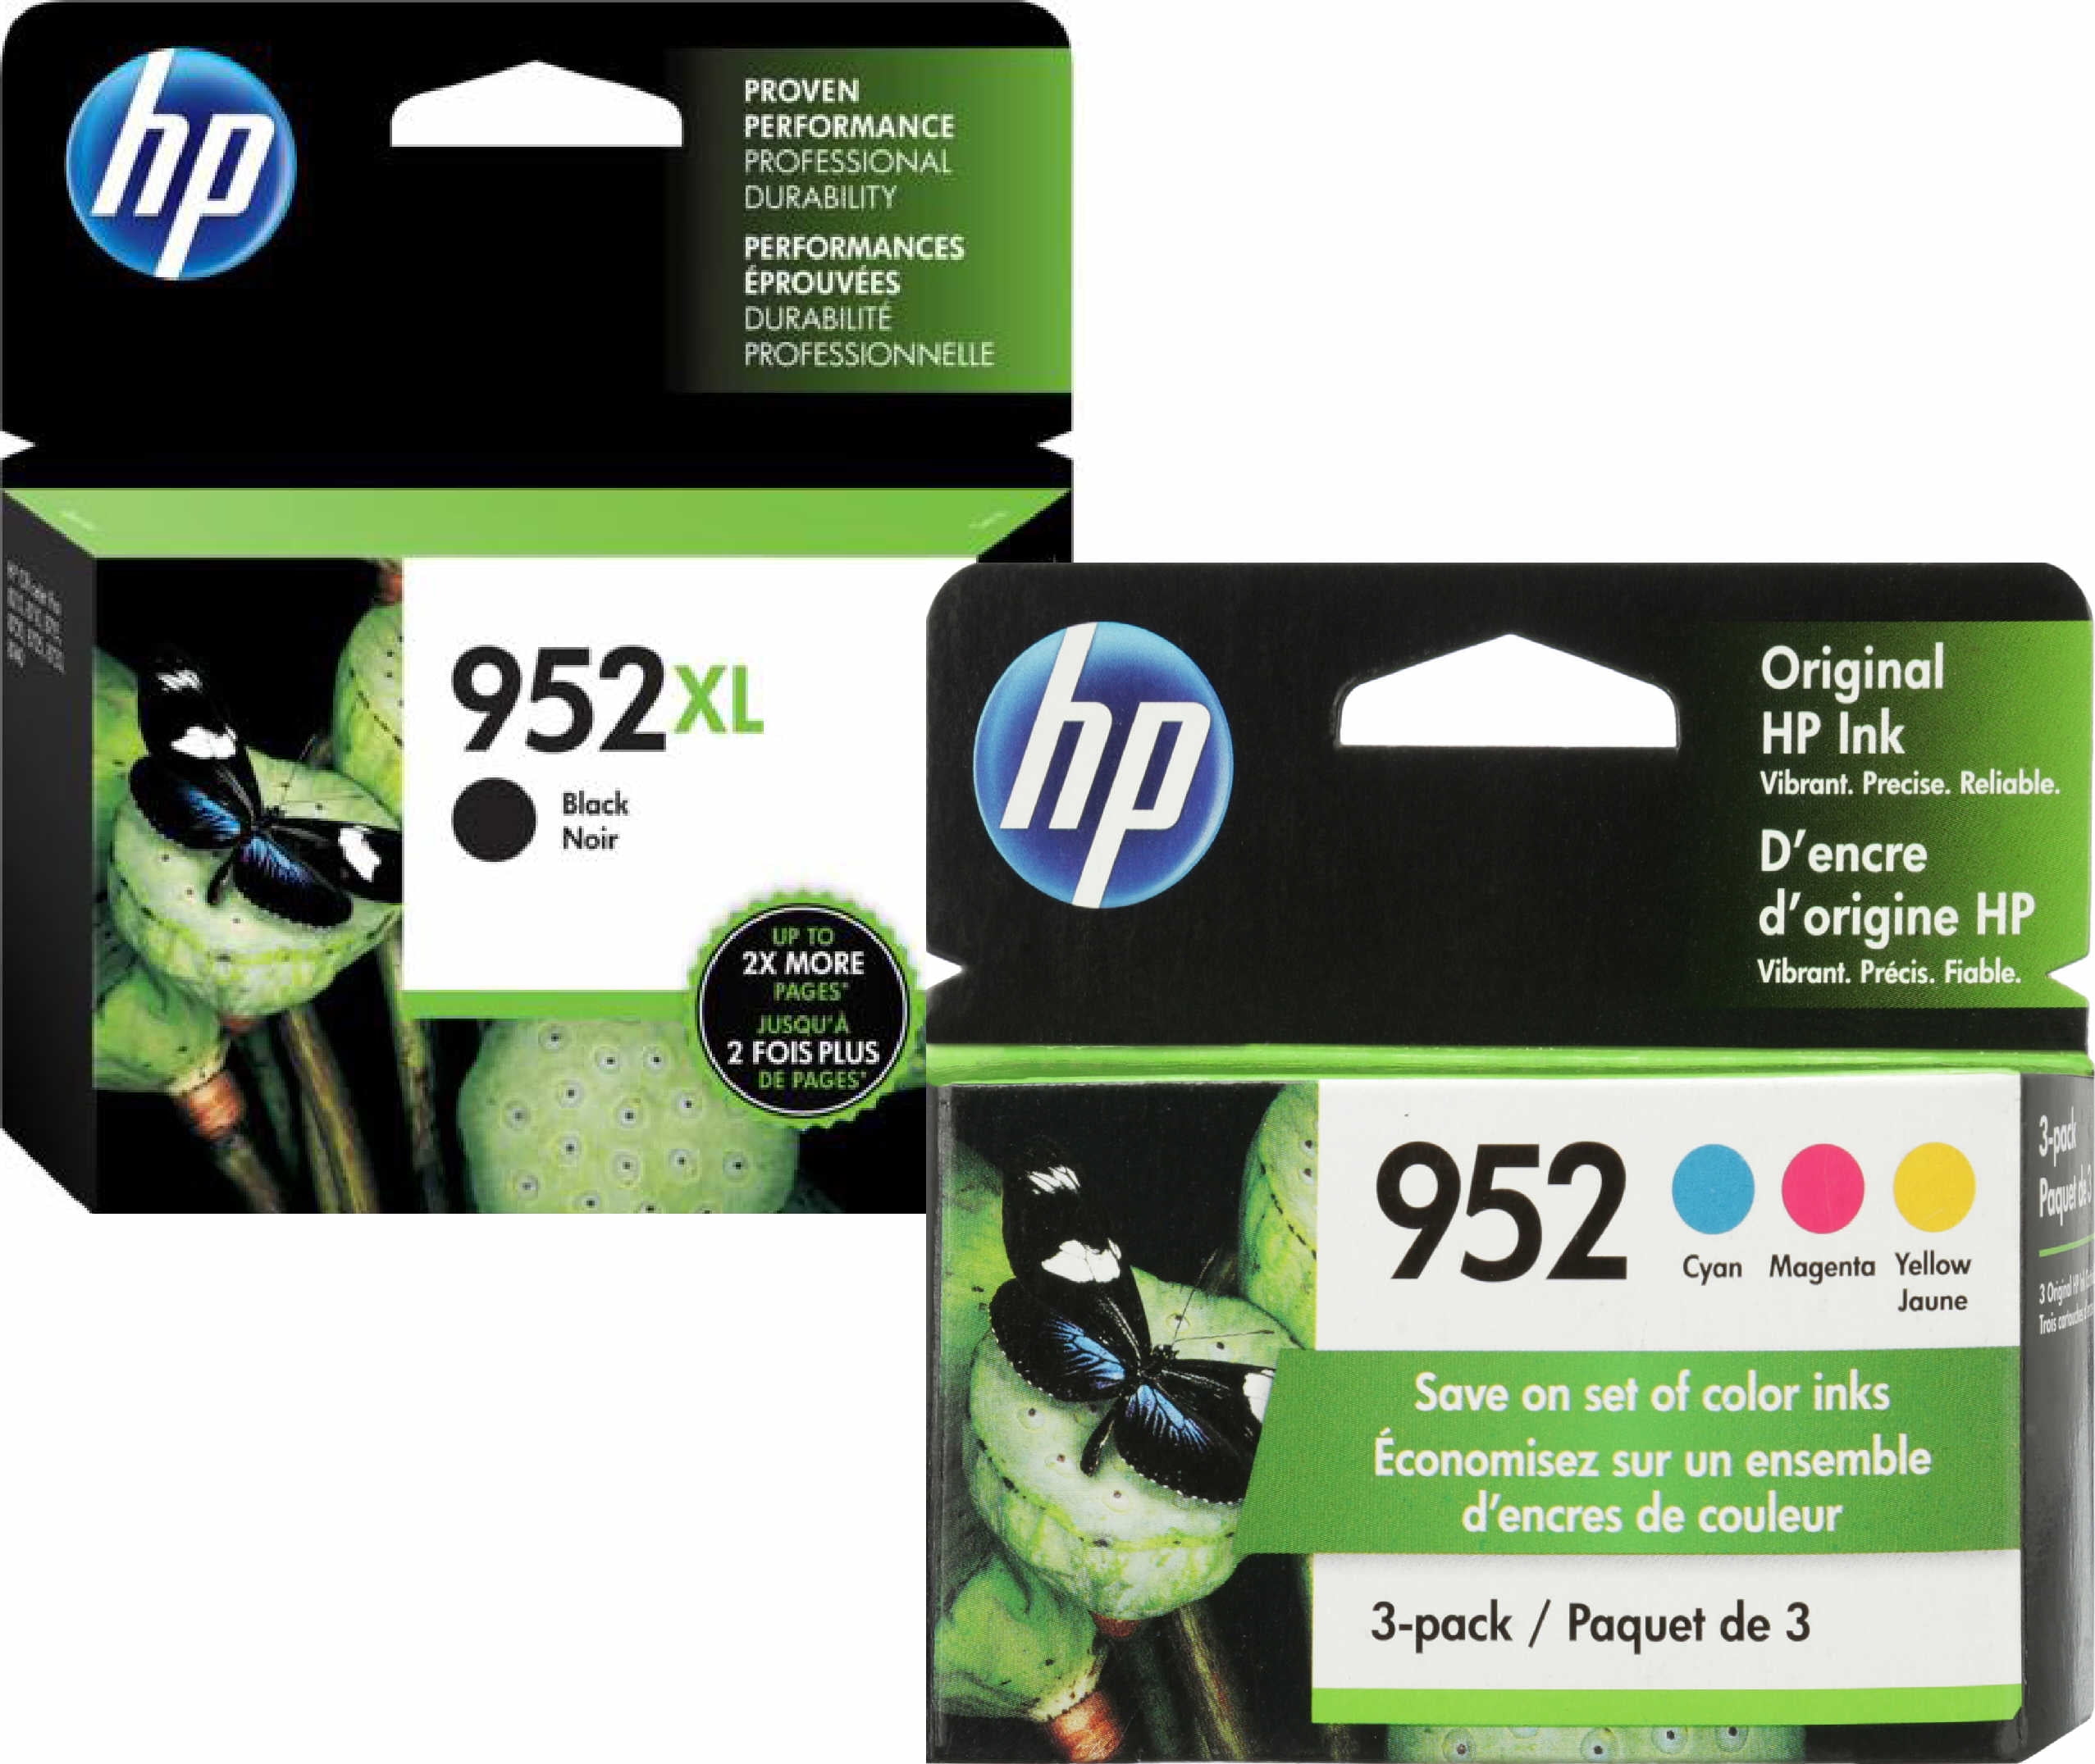 HP 953 4-pack Black/Cyan/Magenta/Yellow Original Ink Cartridges